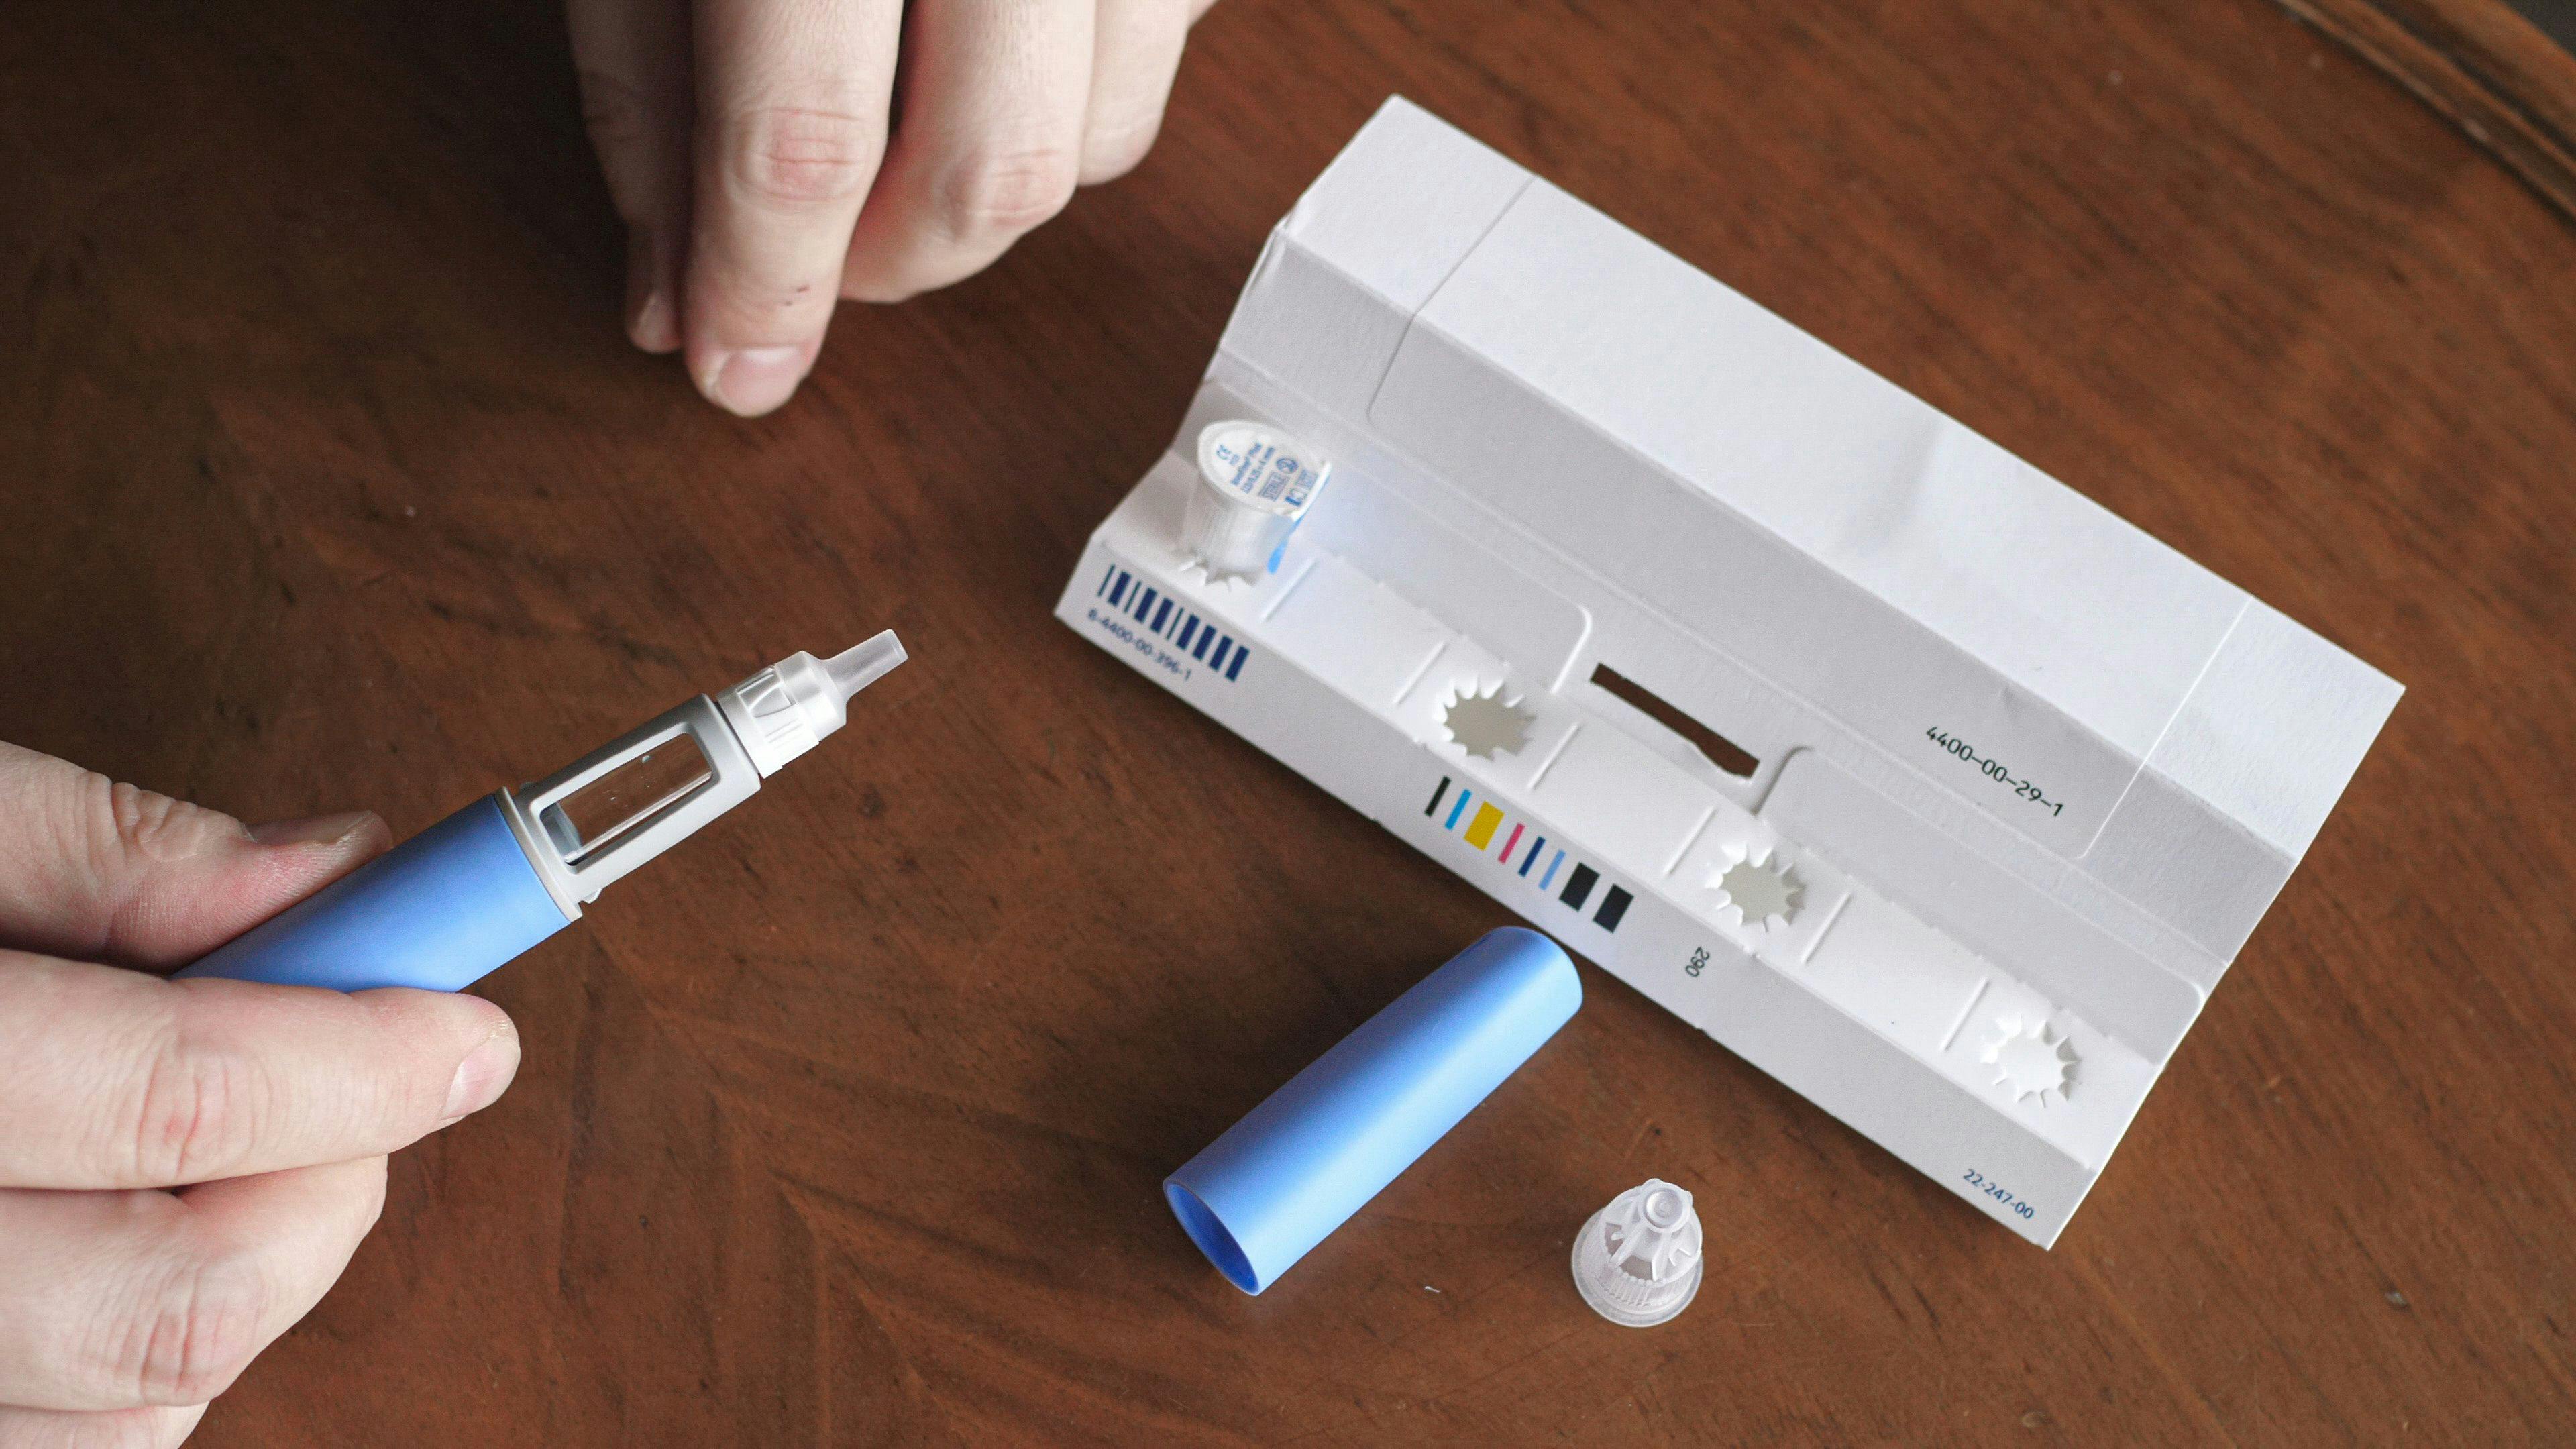 Man preparing Semaglutide Ozempic injection control blood sugar levels | Image Credit: myskin - stock.adobe.com